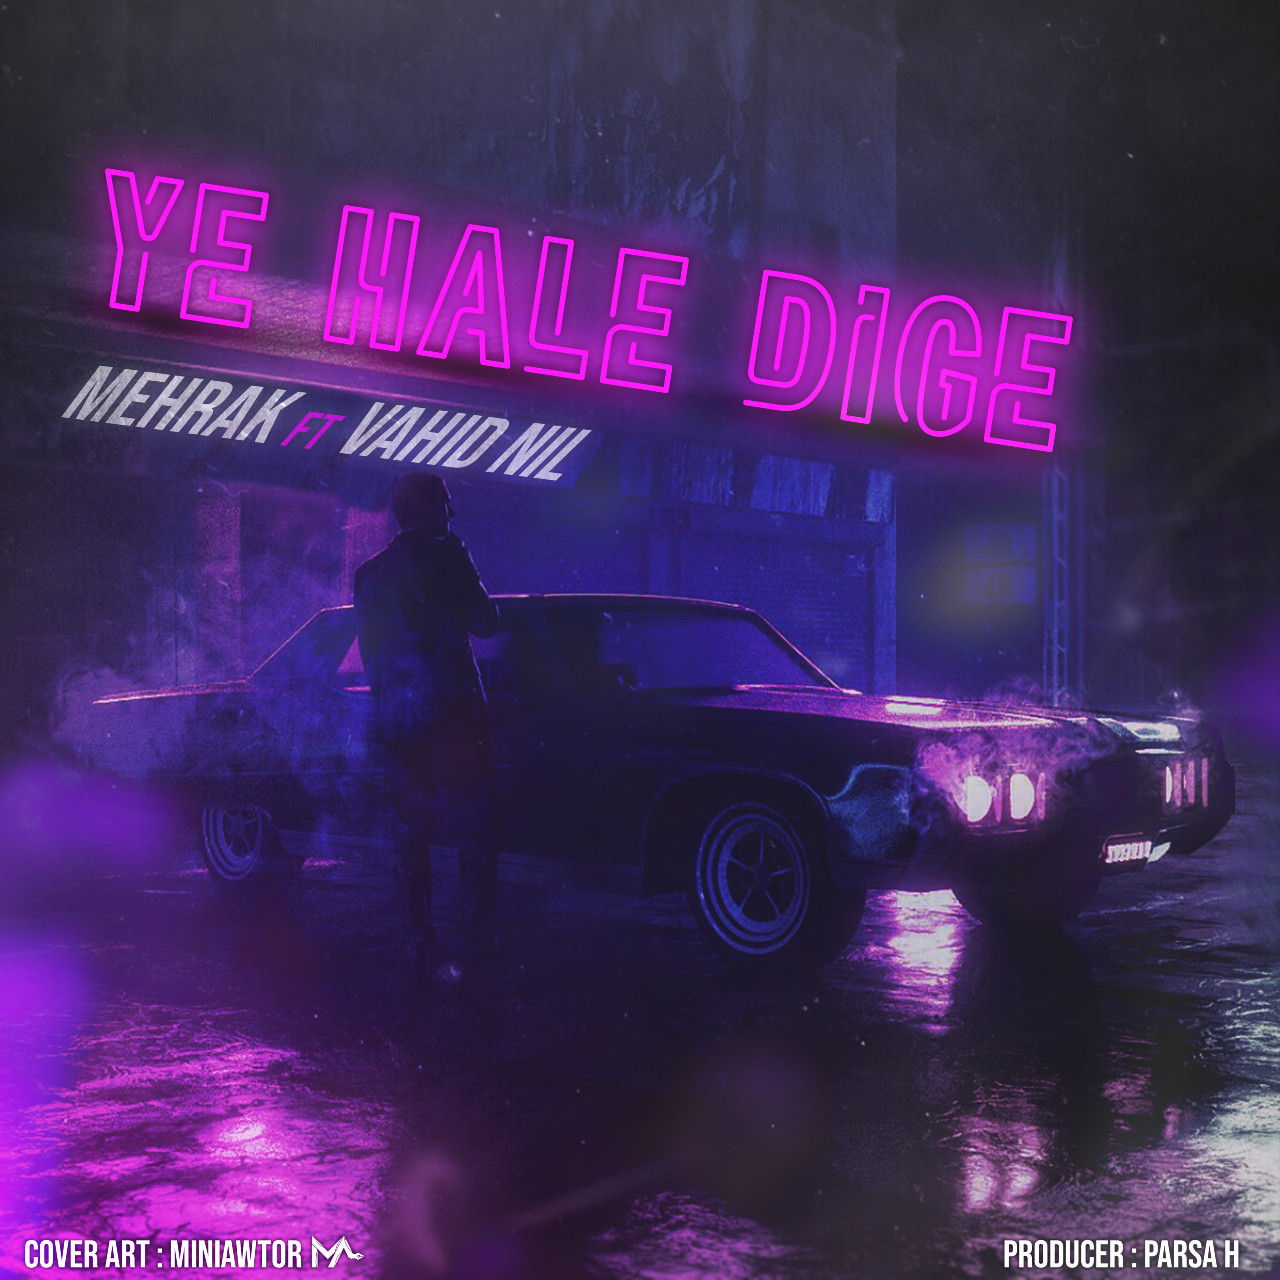  دانلود آهنگ جدید وحید نیل - یه حال دیگه | Download New Music By Vahid Nil - Ye Hale Dige  (feat. Mehrak)